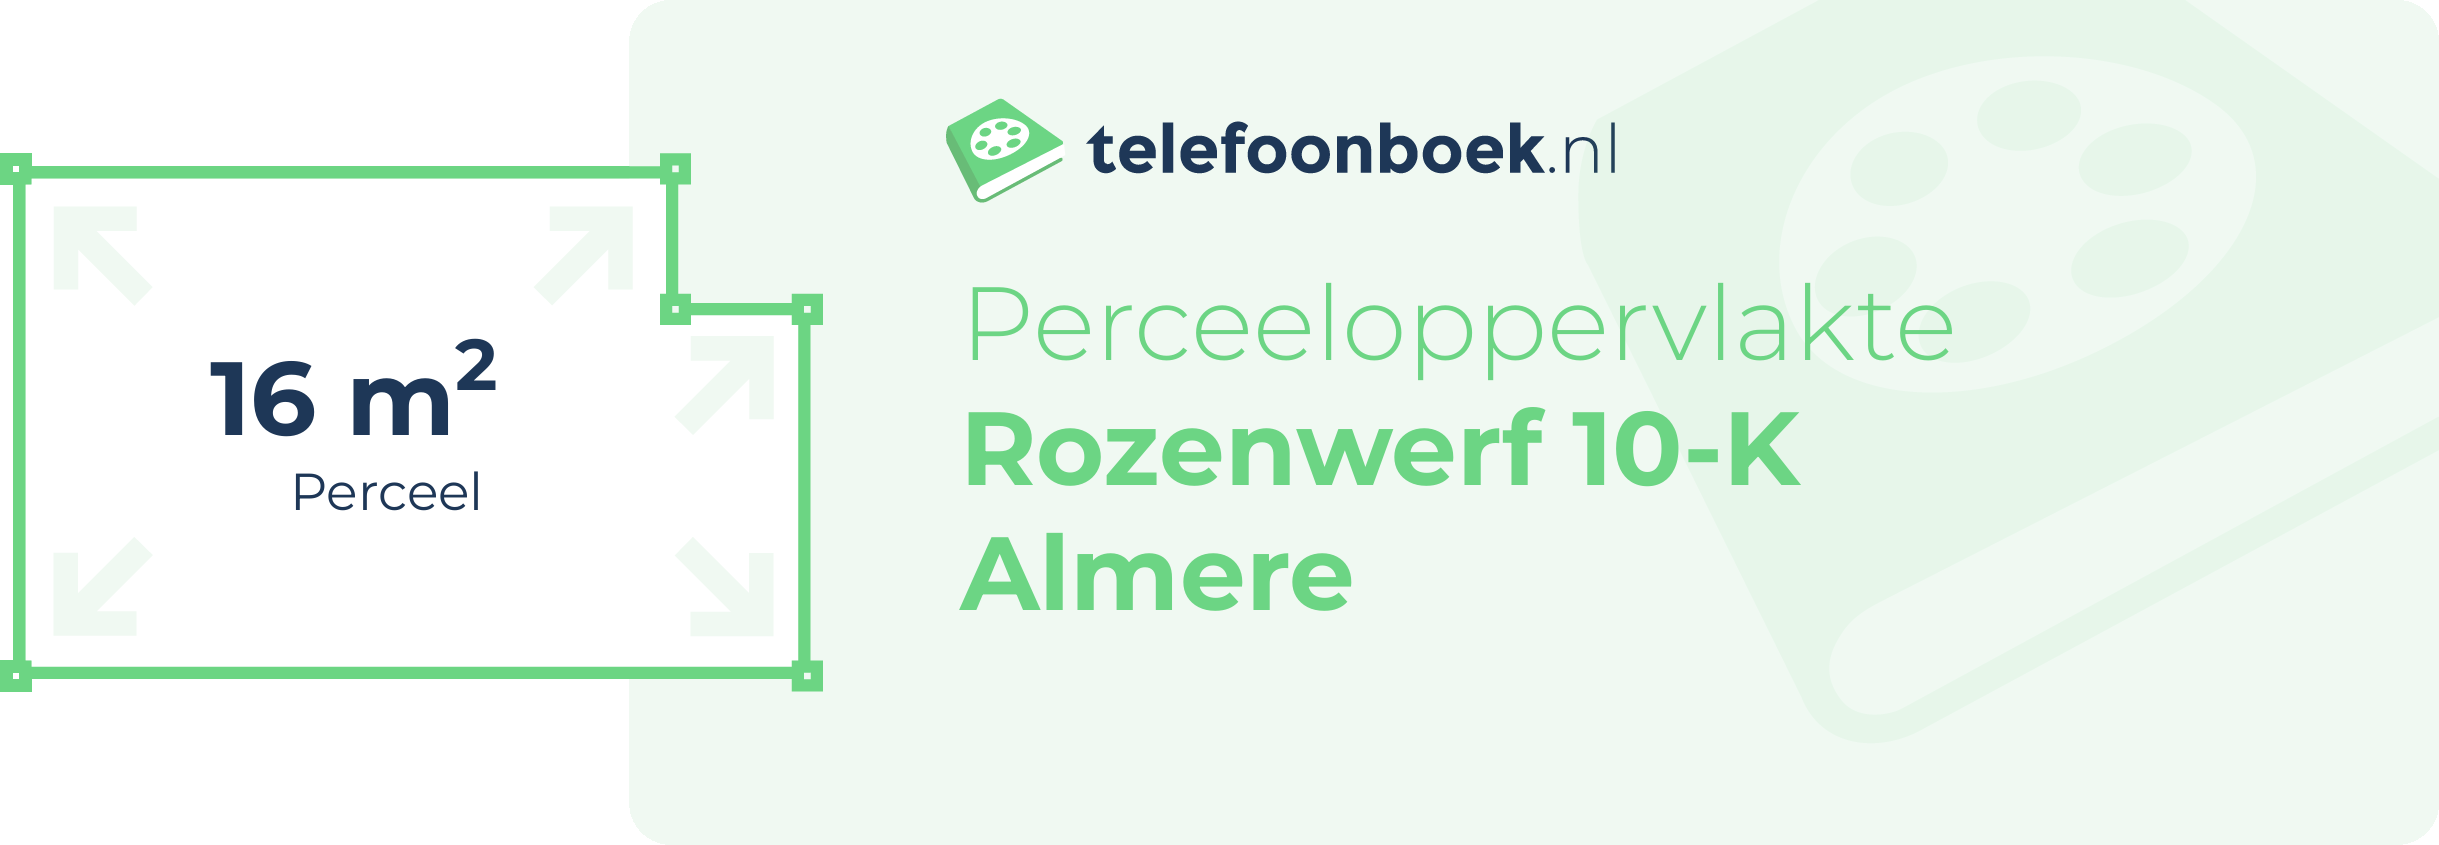 Perceeloppervlakte Rozenwerf 10-K Almere